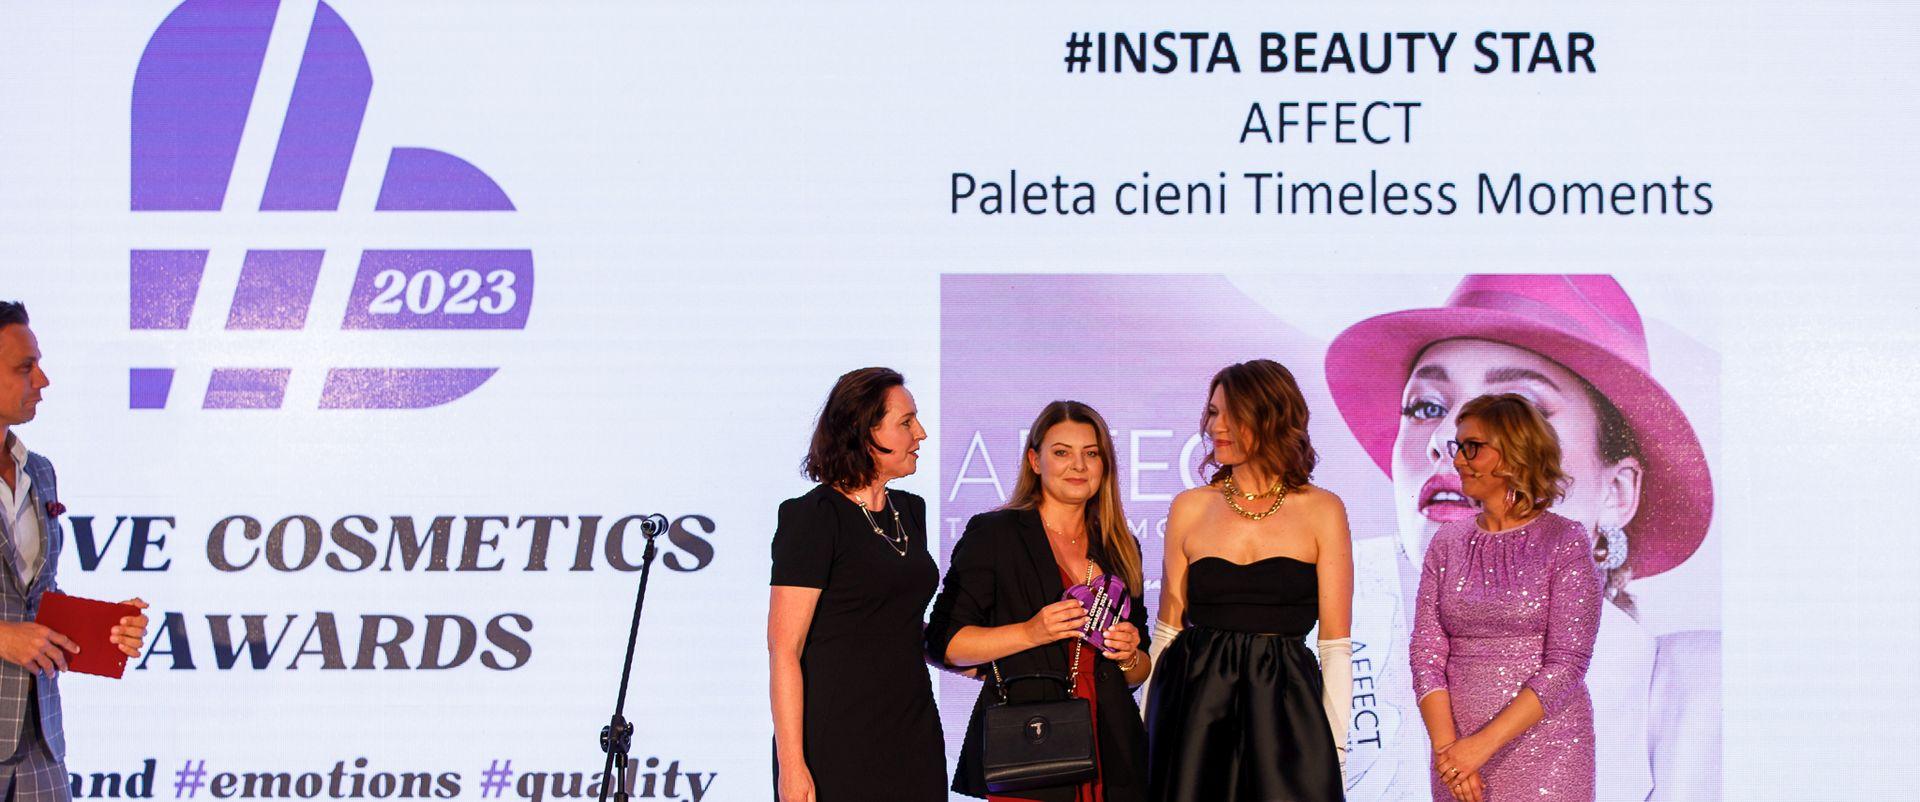 Insta Beauty Star - nagroda Love Cosmetics Awards 2023 dla Affect za paletę cieni Timeless Moments